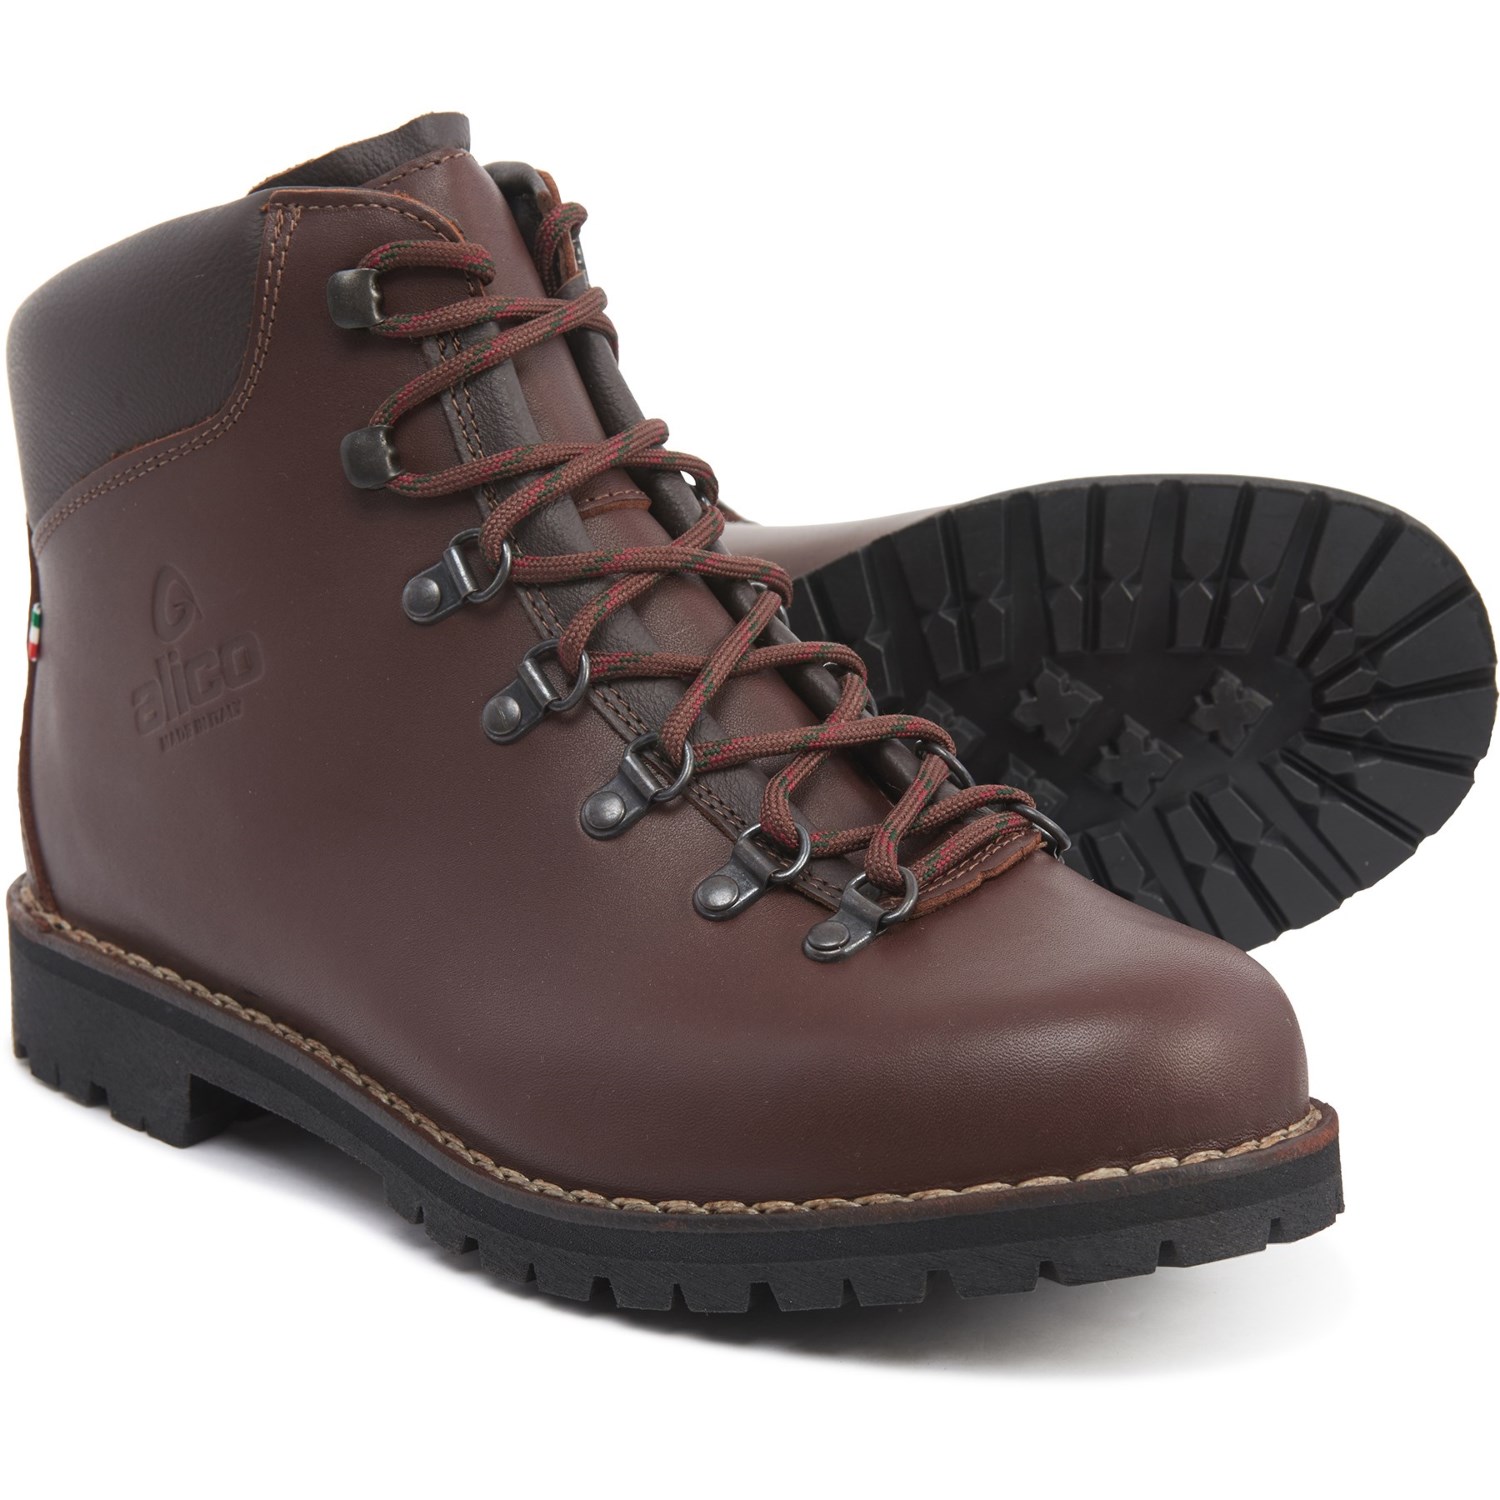 italian hiking boots brands